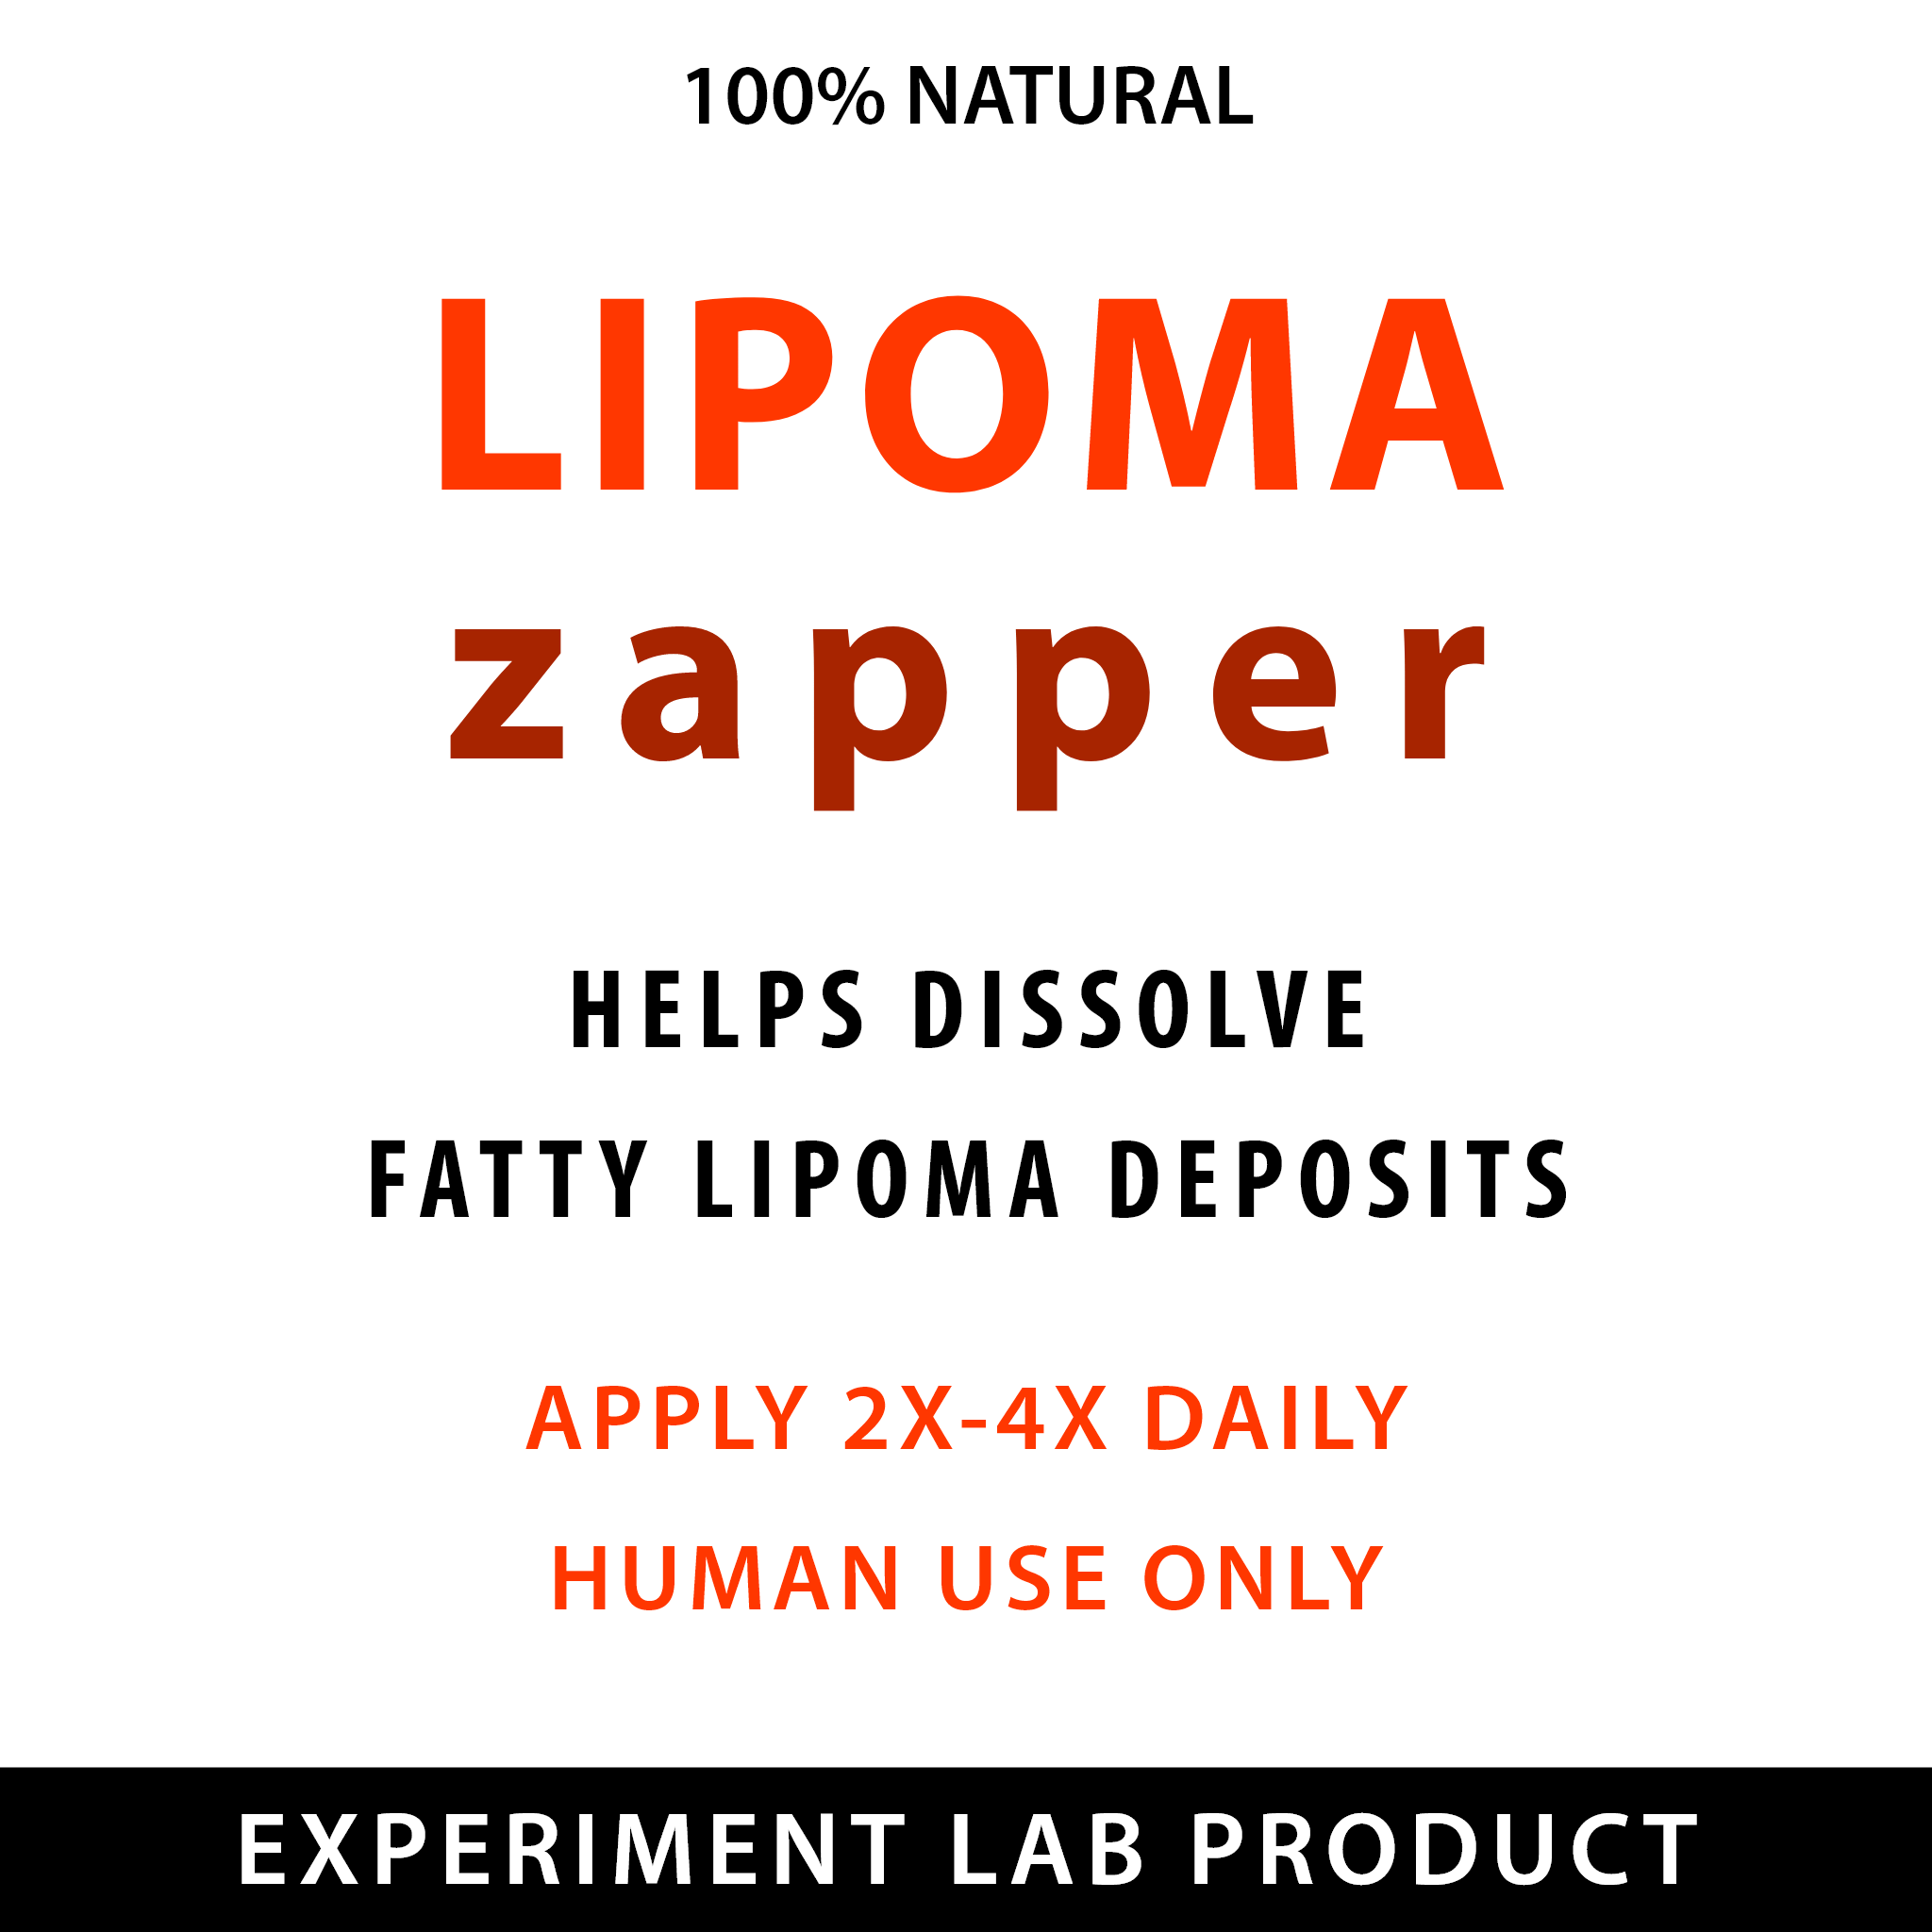 Lipoma Zapper - helps dissolve fatty lipoma deposits